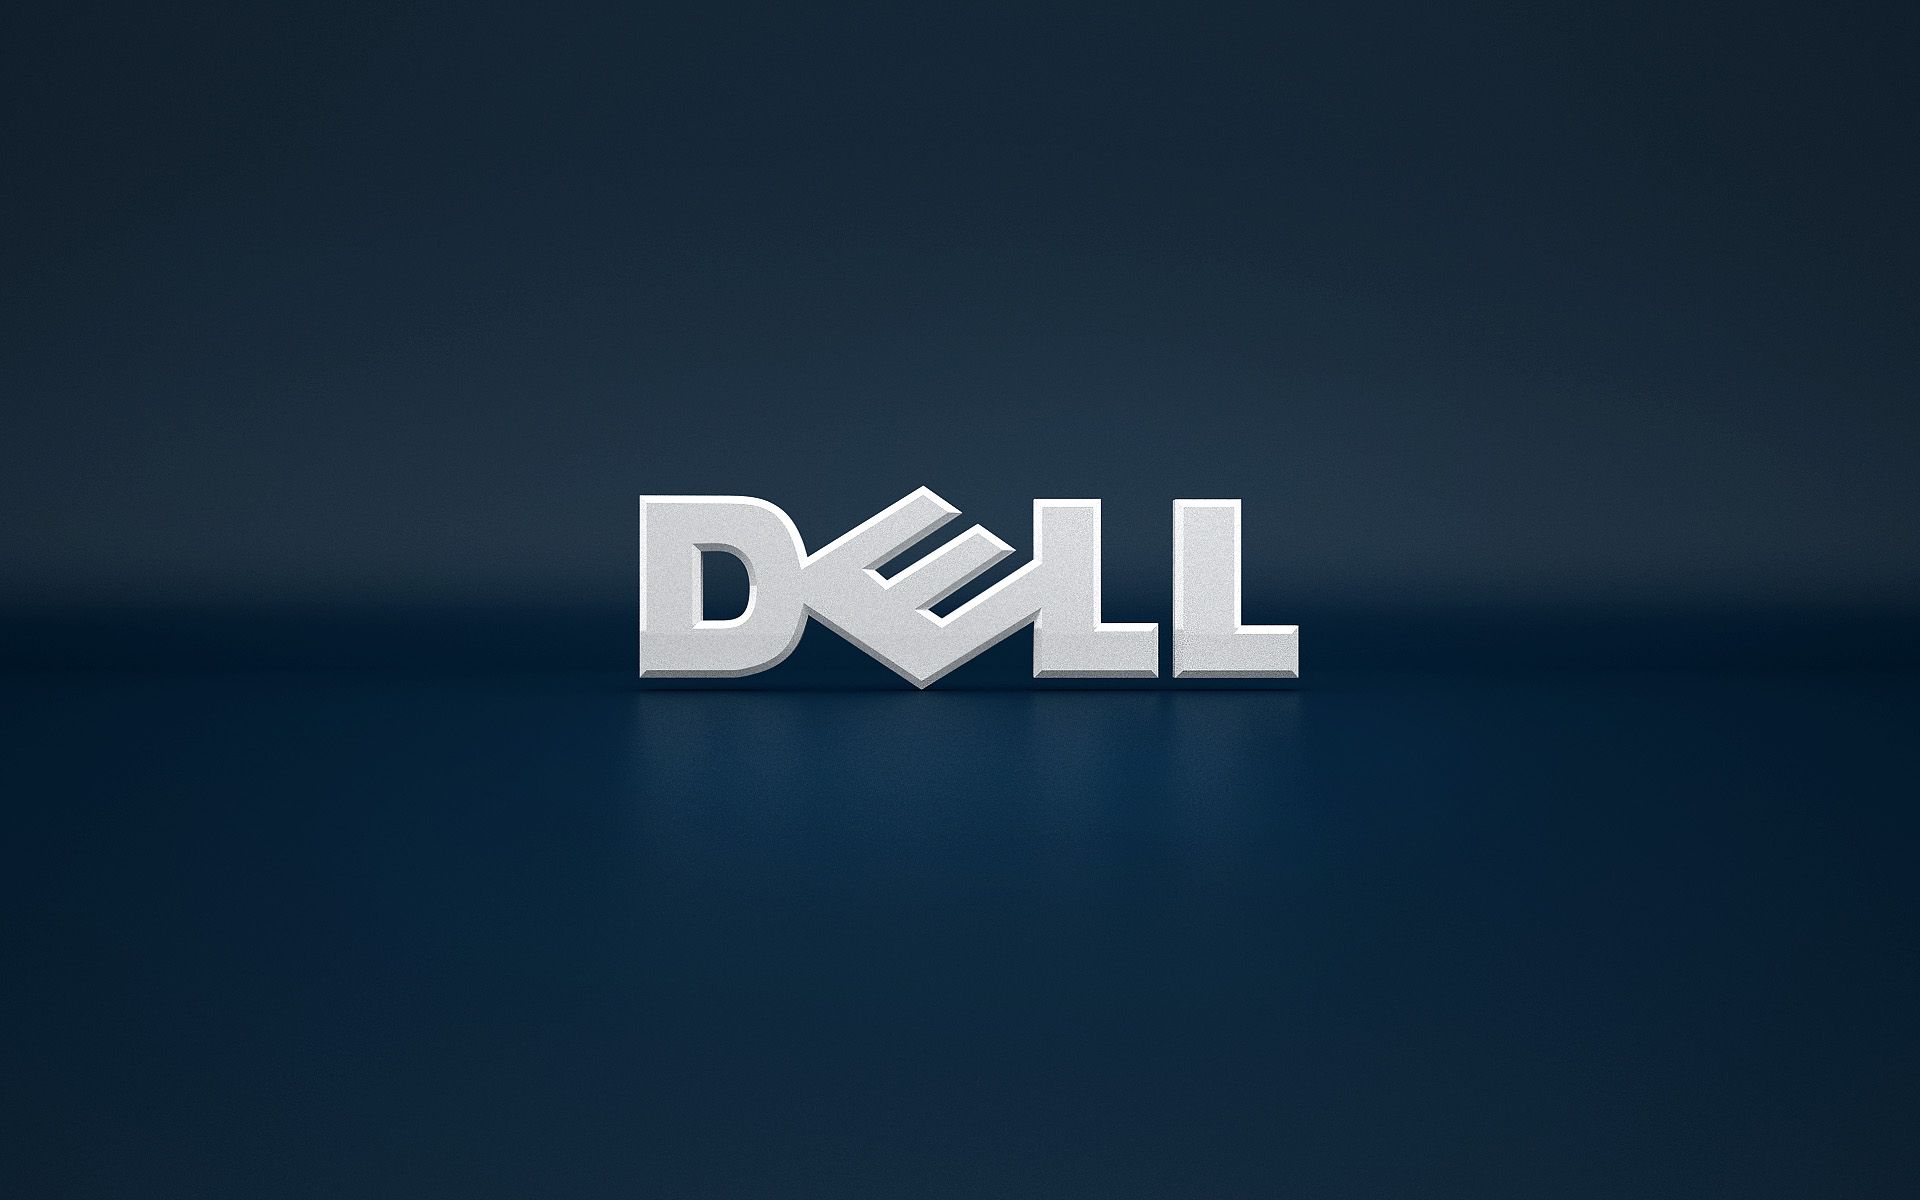 Dell 4K Wallpaper Free Dell 4K Background